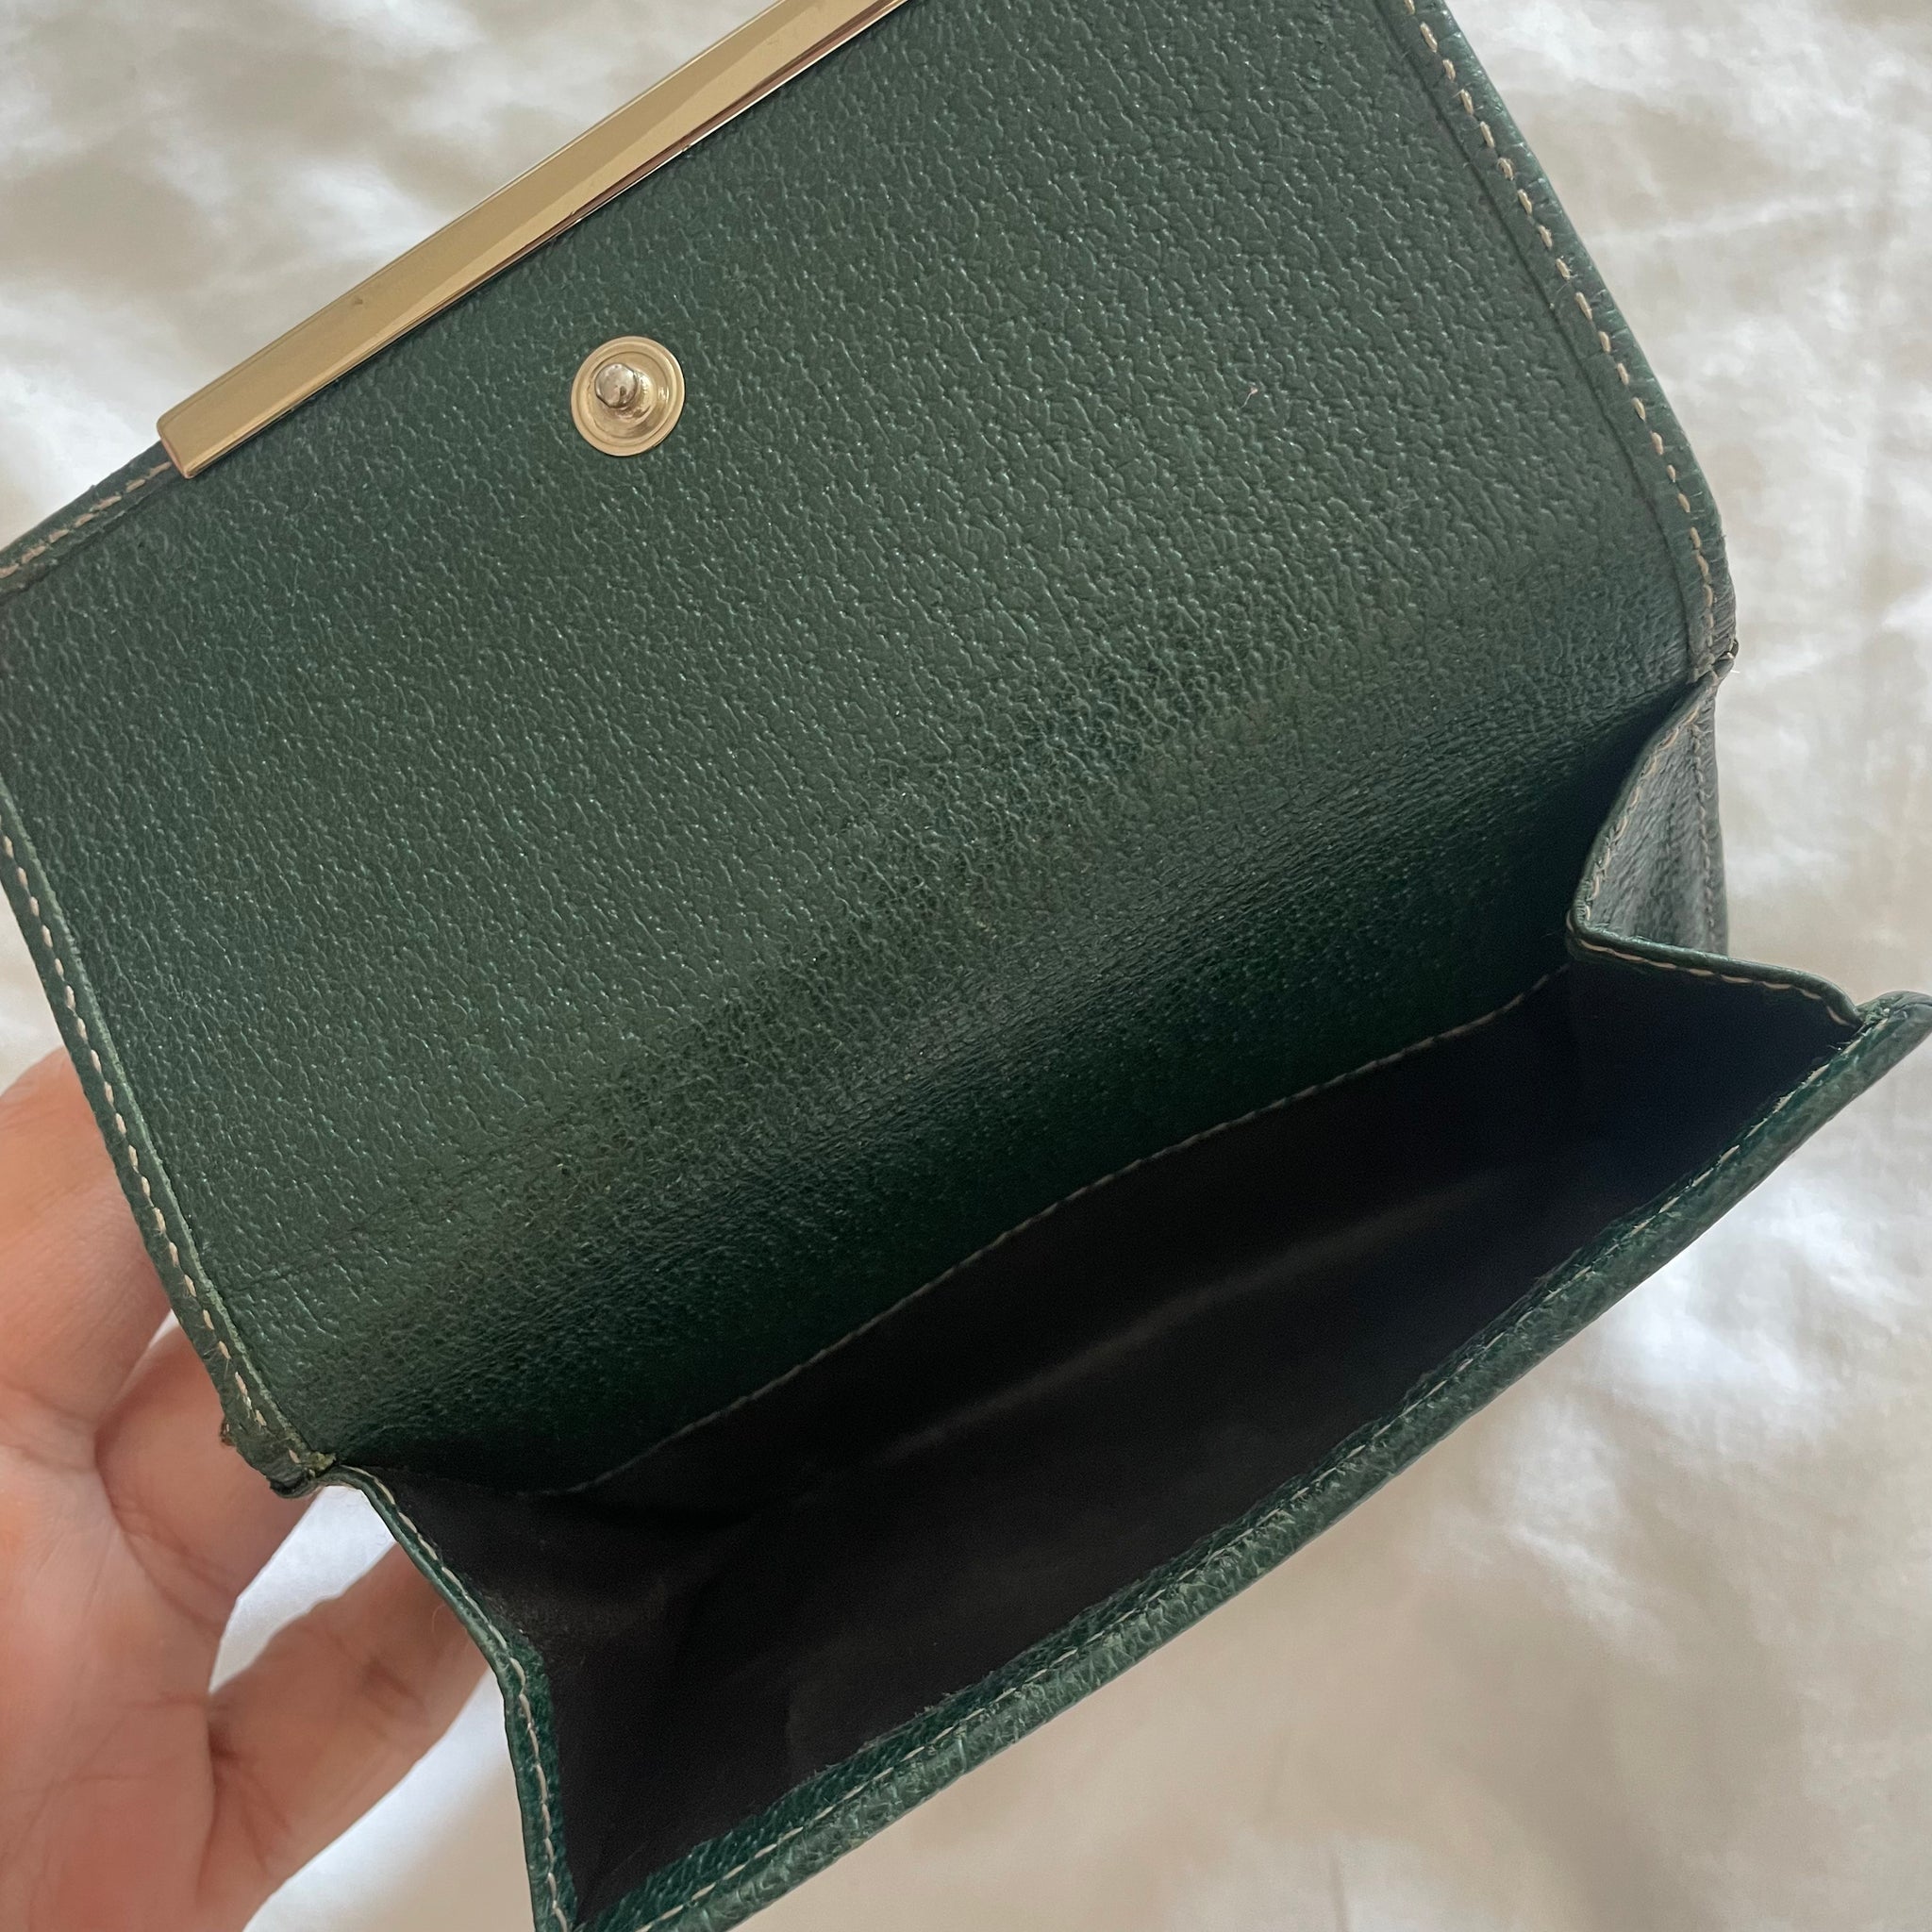 Gucci Pre-owned Women's Wallet - Beige - One Size